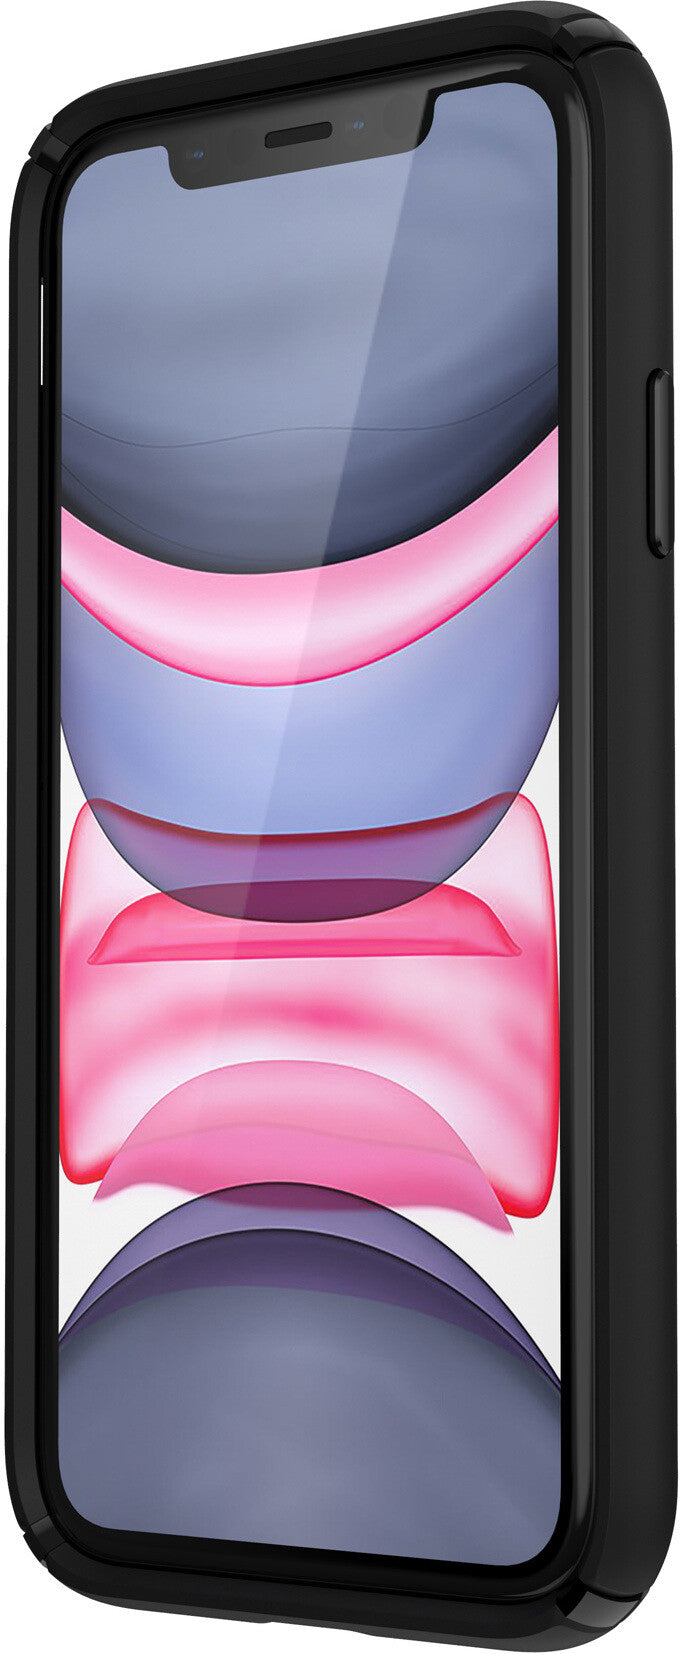 Speck Presidio2 Pro for iPhone 11 in Black